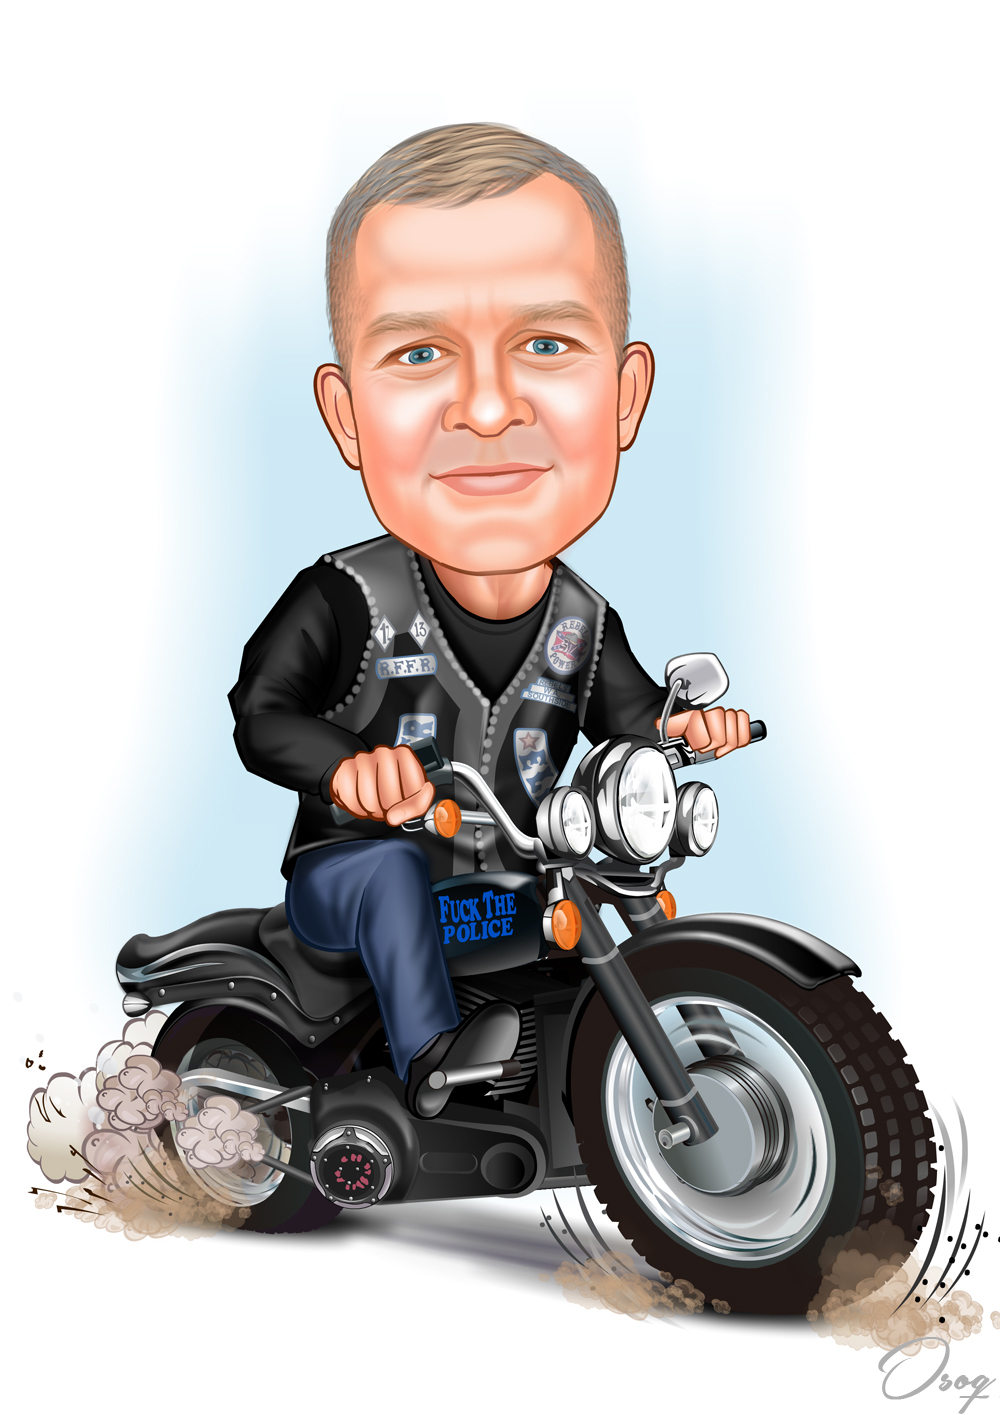 Motorcyclist Portrait